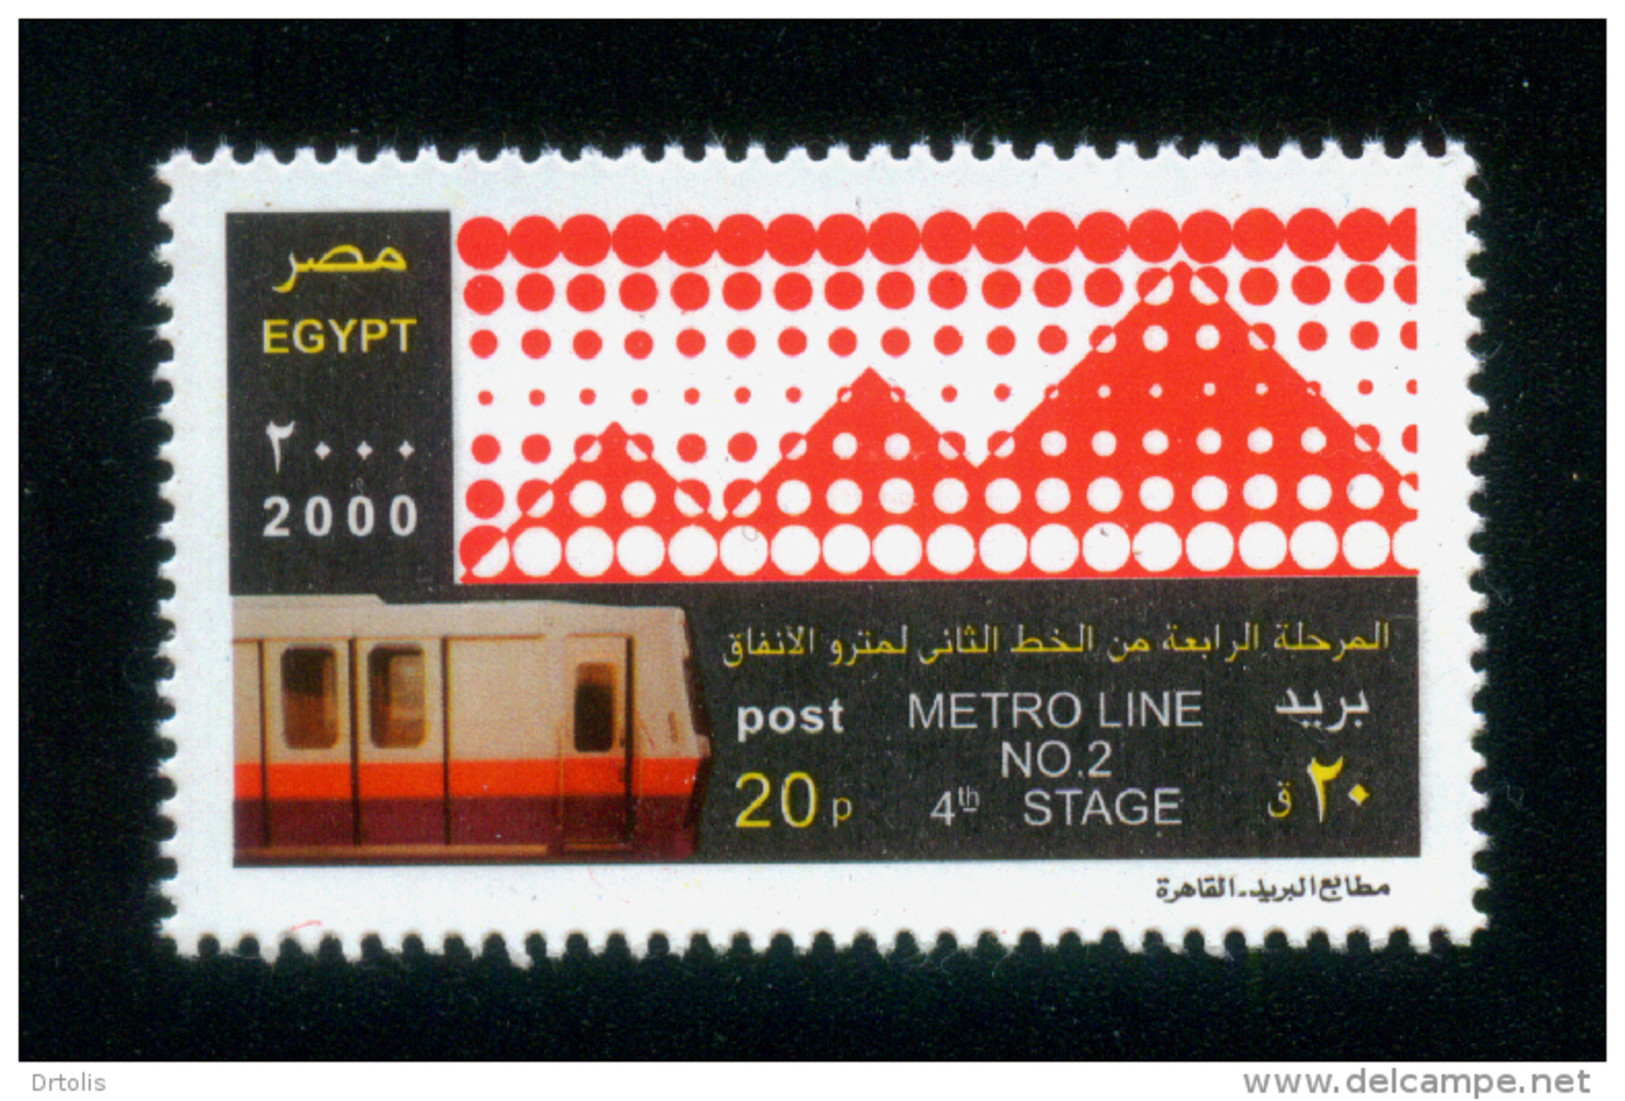 EGYPT / 2000 / CAIRO AUBWAY LINE / METRO / TRAIN / PYRAMIDS / MNH / VF - Ungebraucht